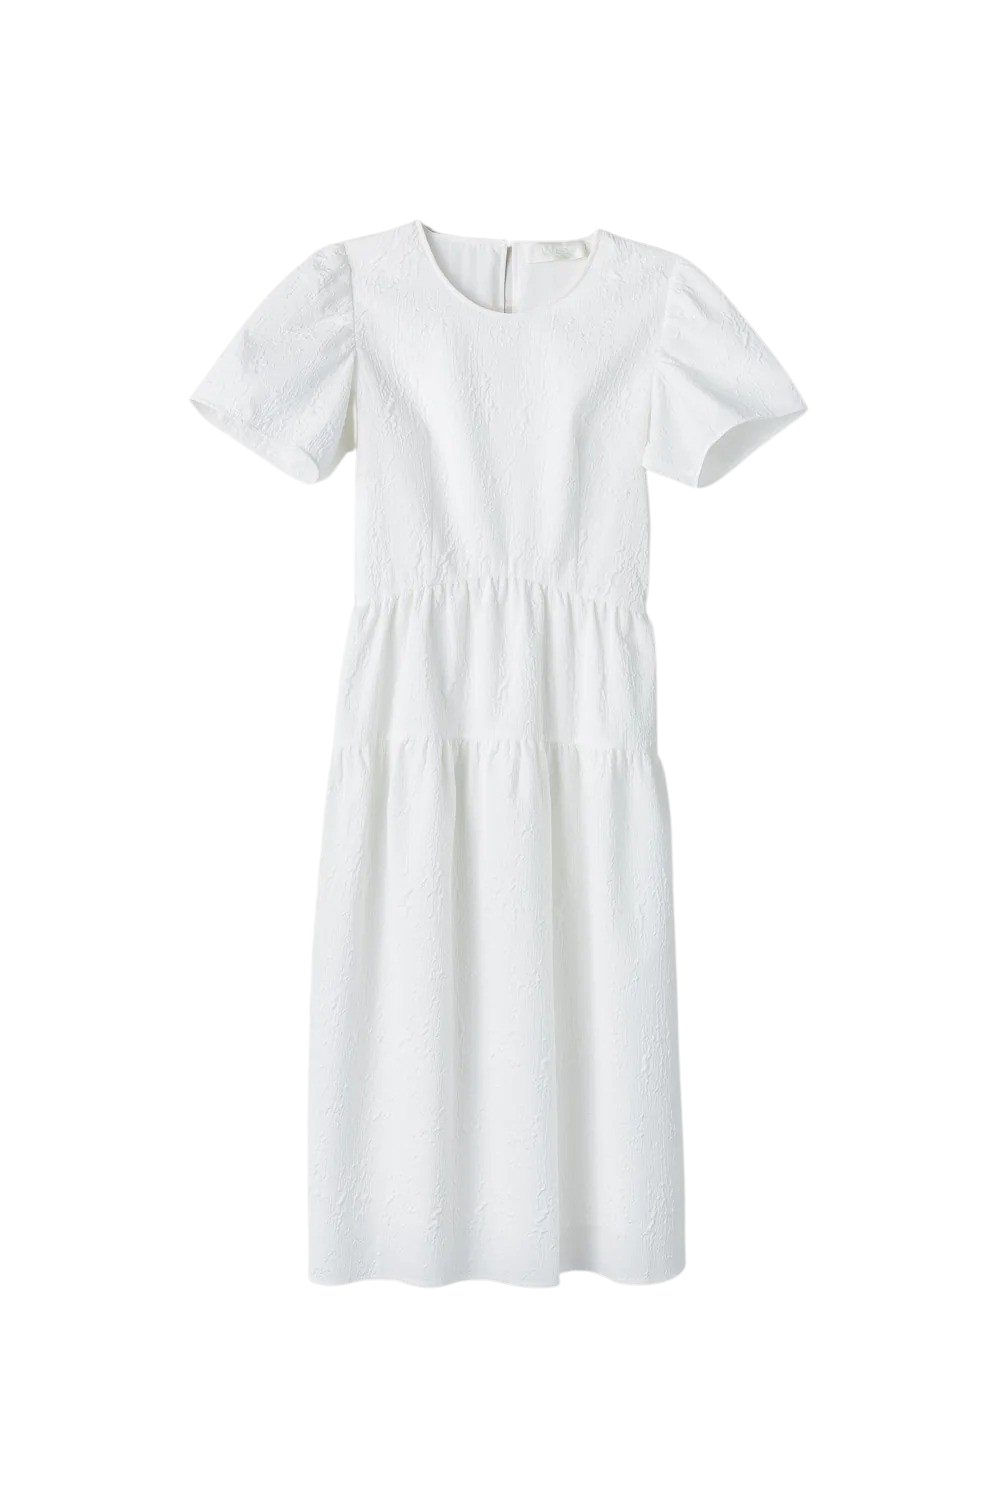 fwss-su22-late-nights-dress-star-white-polyester-dress_1800x1800